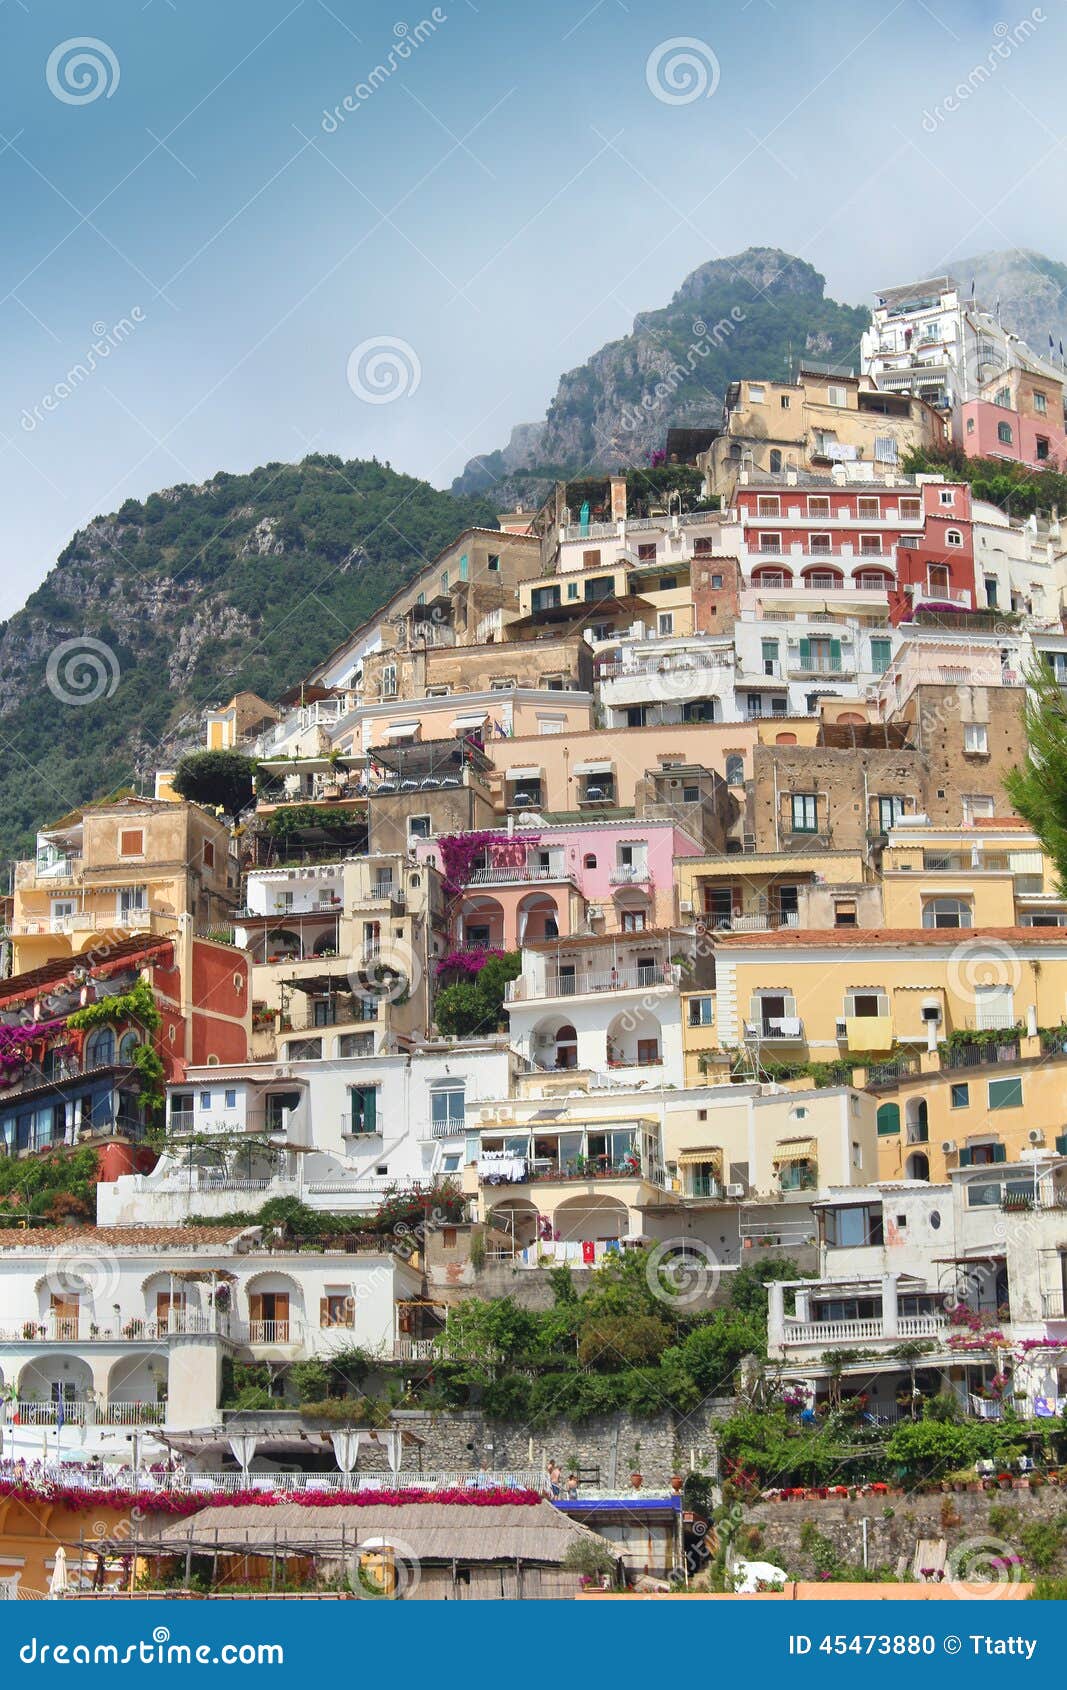 Positano houses stock photo. Image of architecture, italy - 45473880